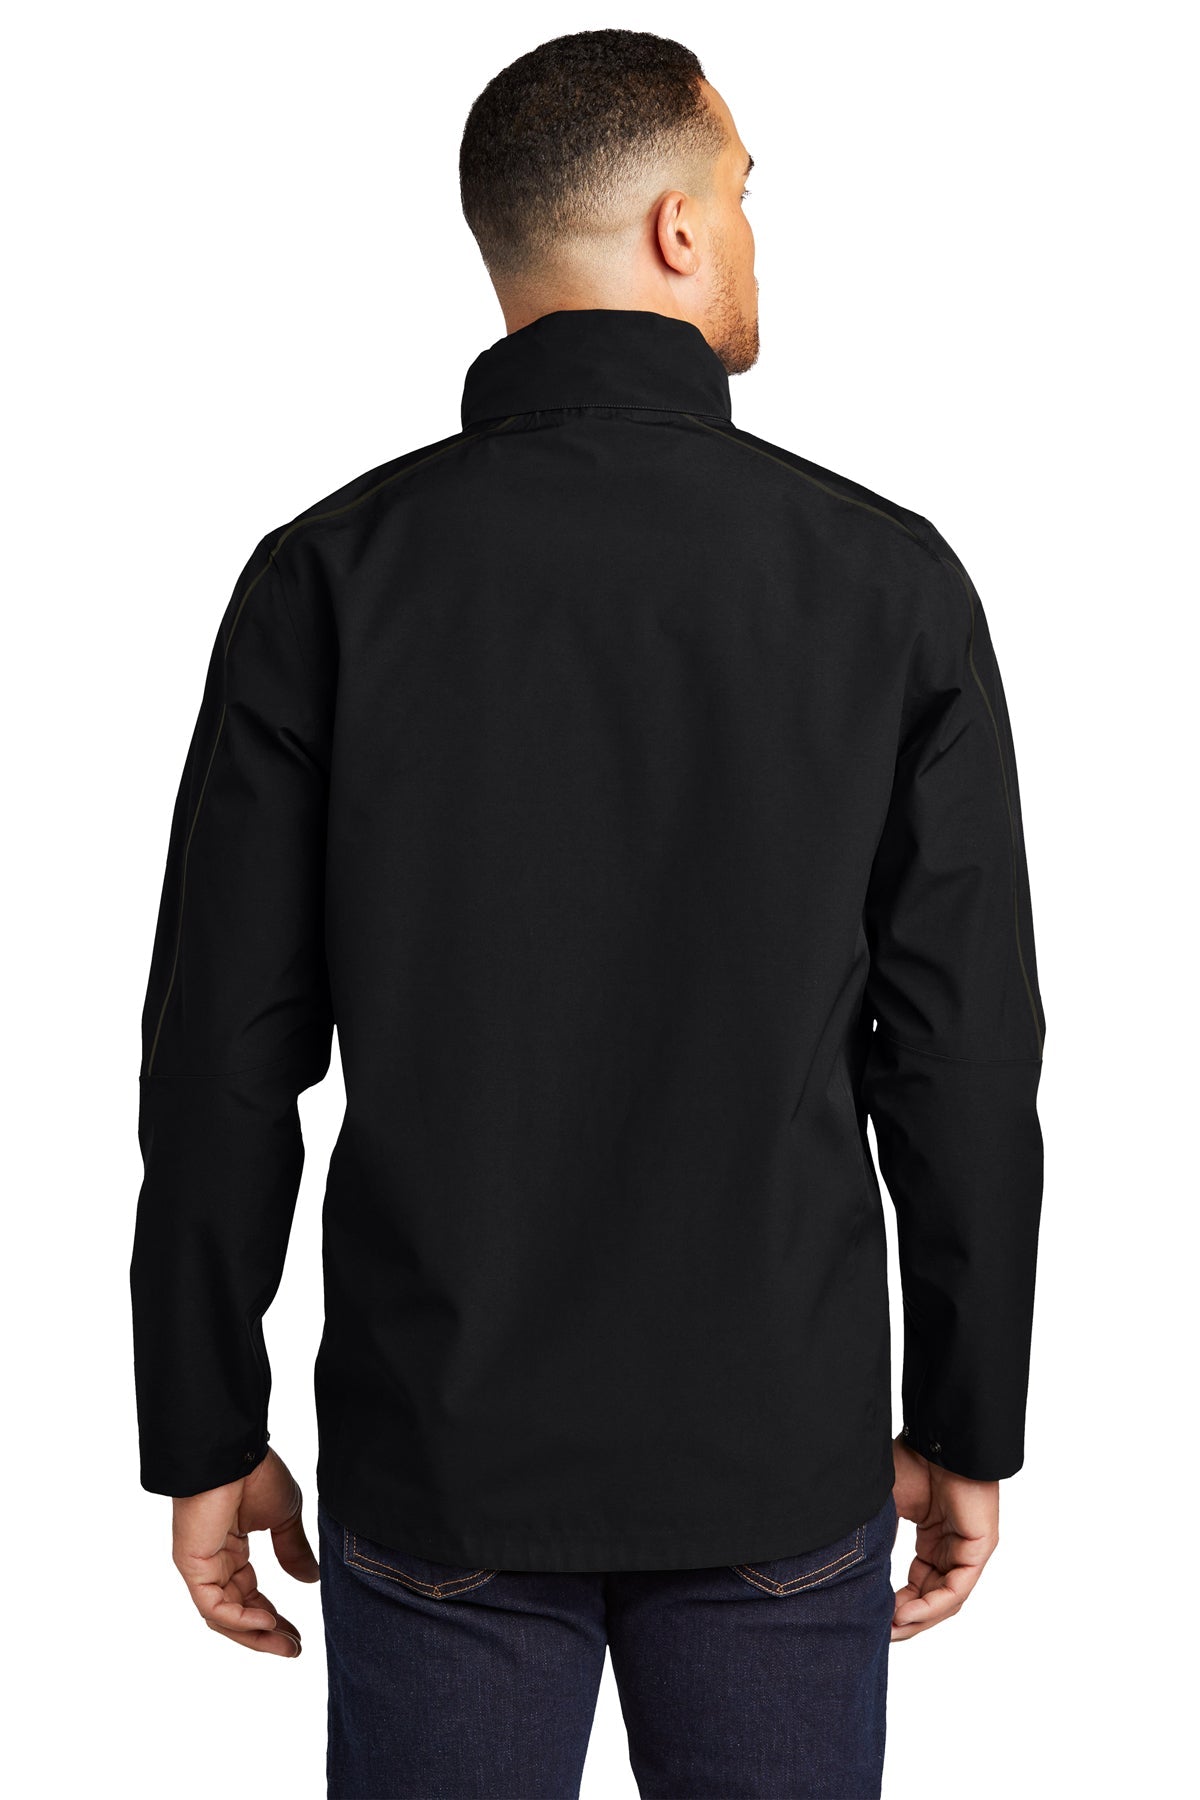 OGIO Utilitarian Custom Jackets, Blacktop